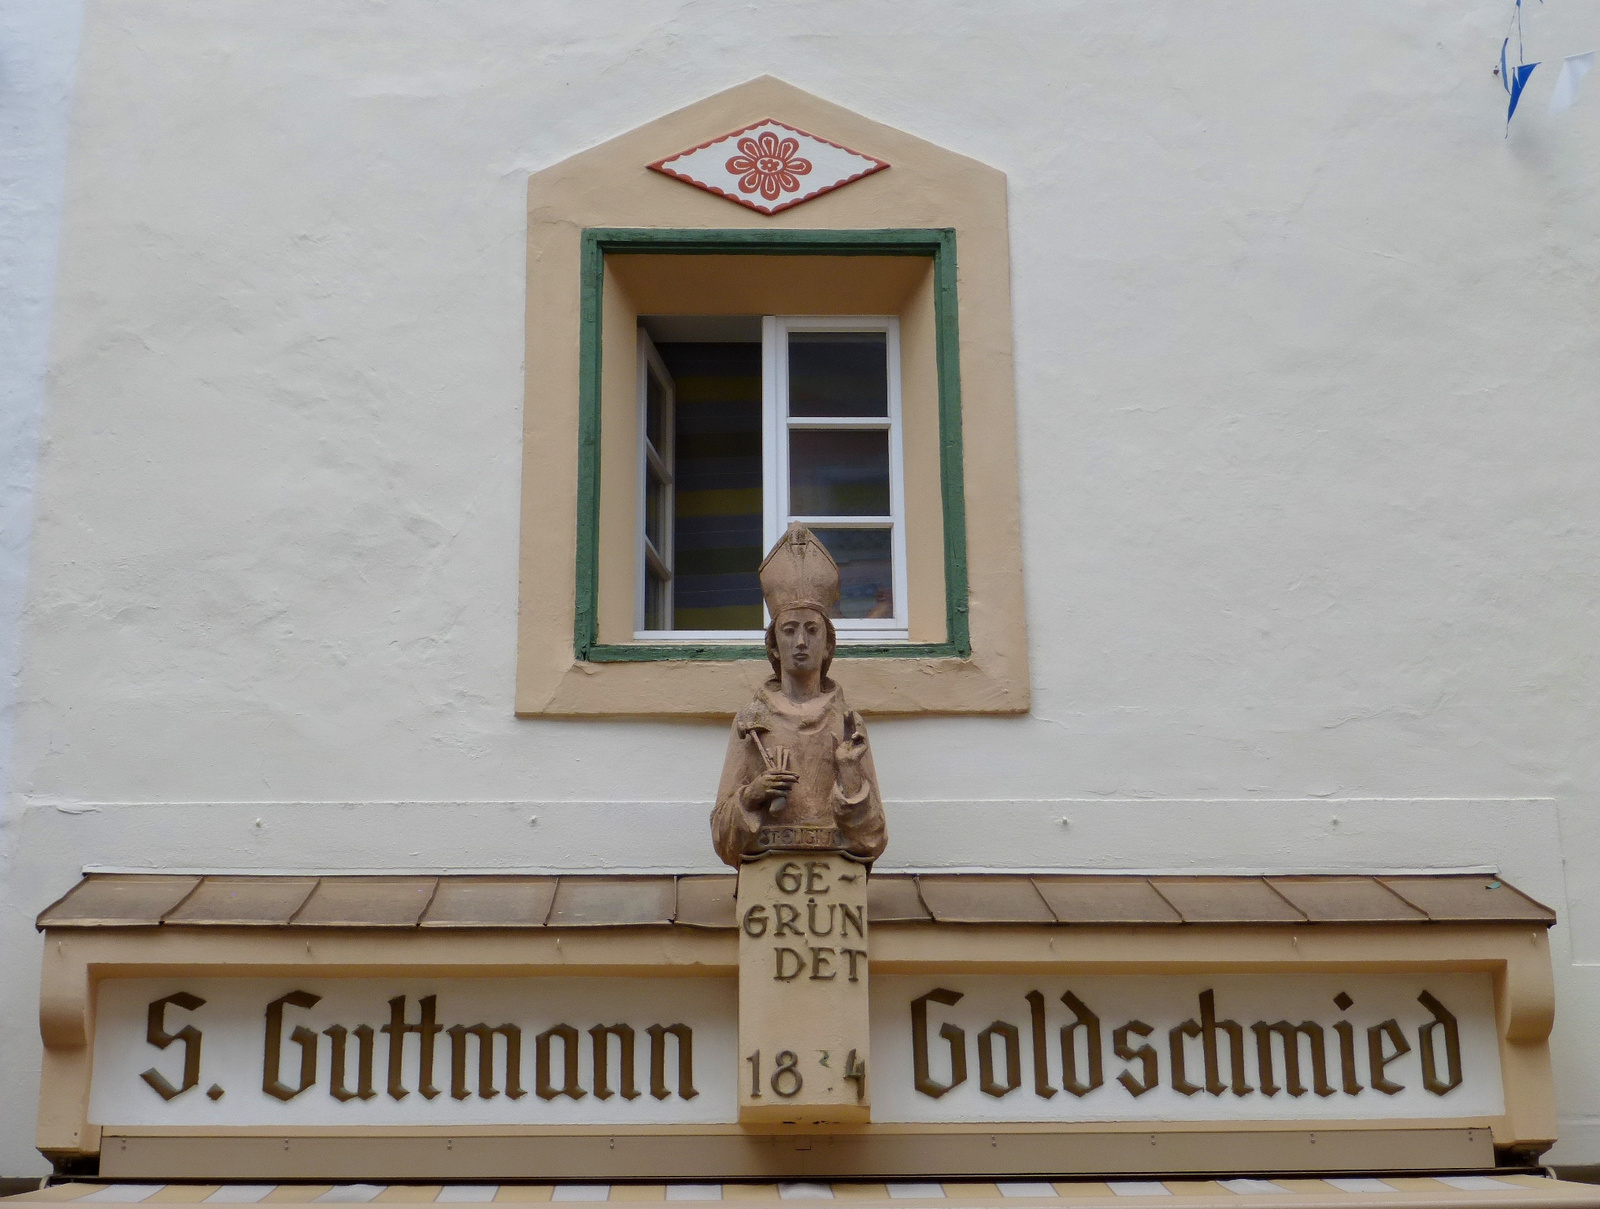 "S. Guttmann Goldschmied"